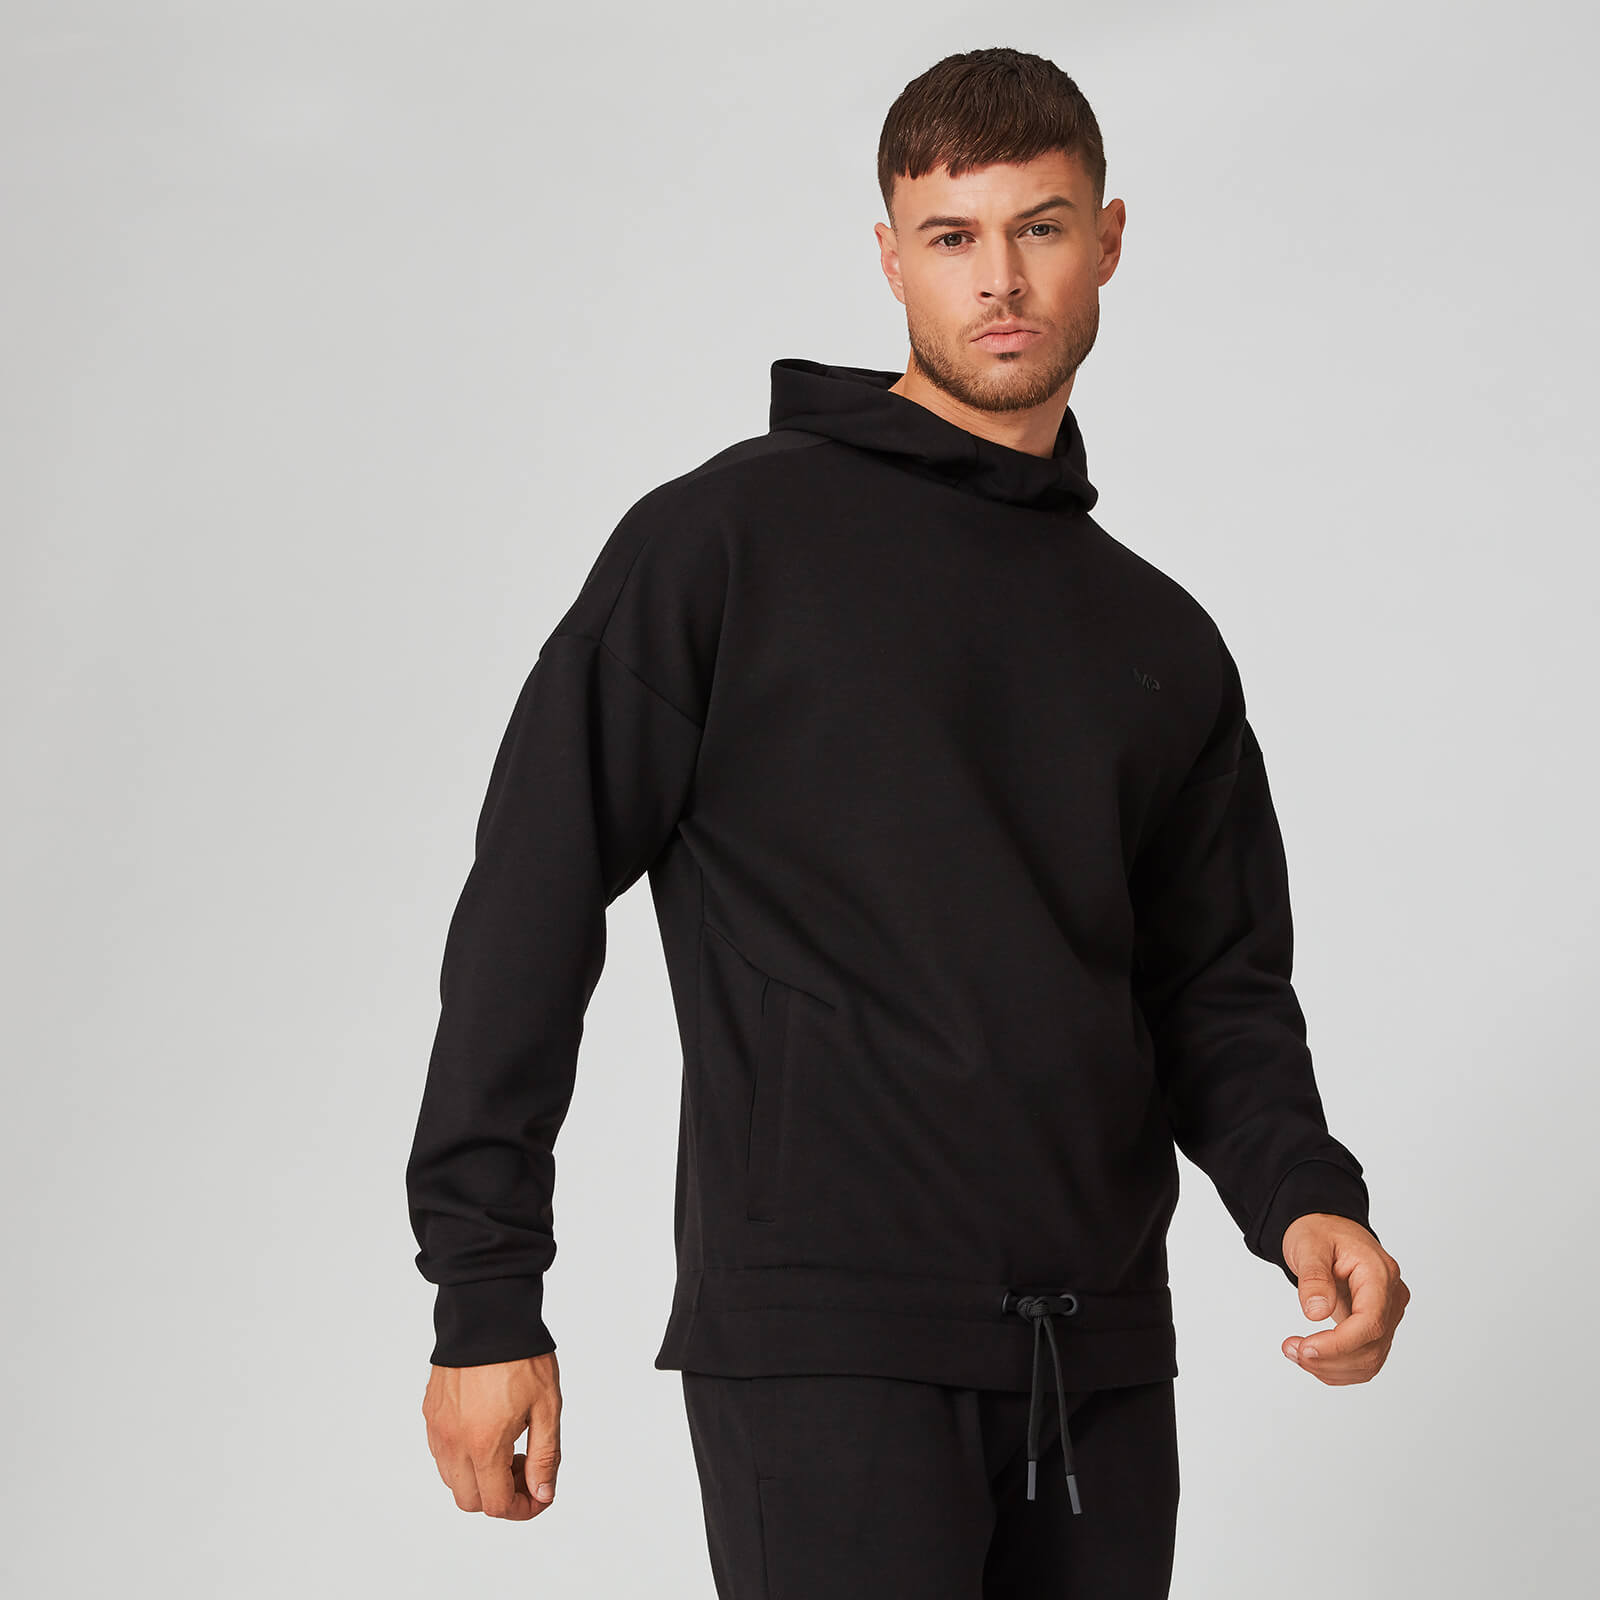 Form Pro Pullover majica s kapuljačom - Crna